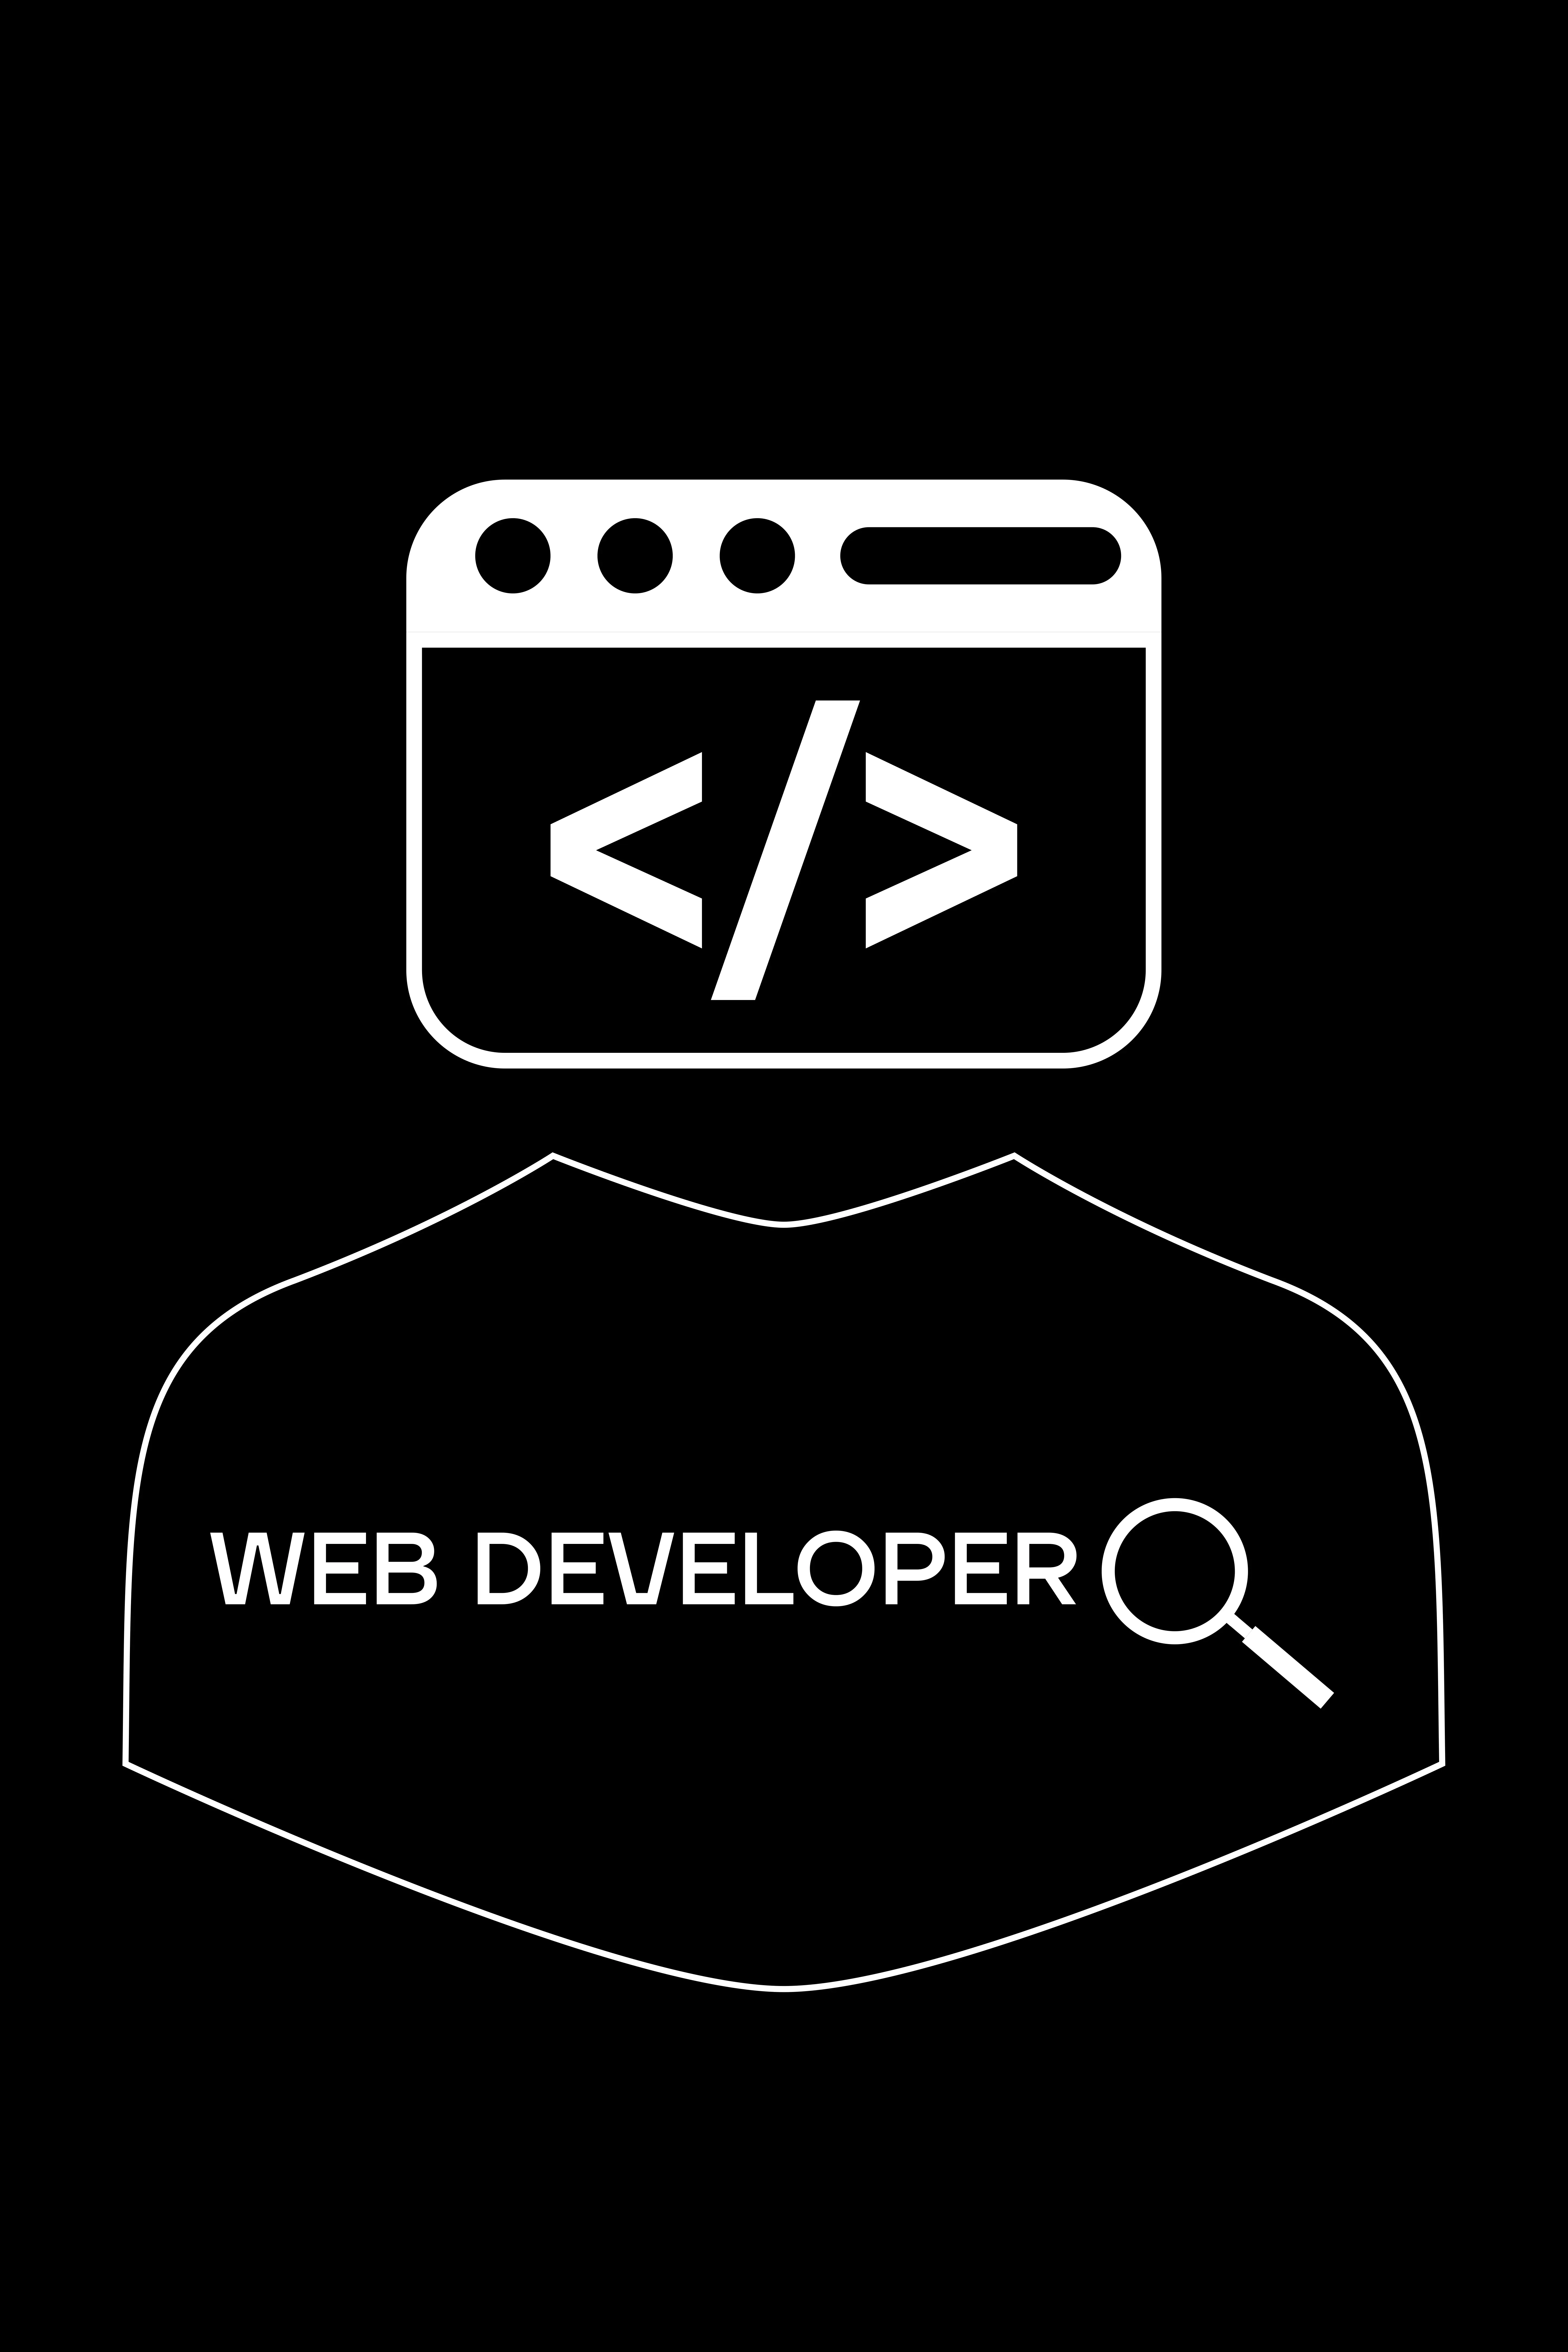 Apply for a web developer position